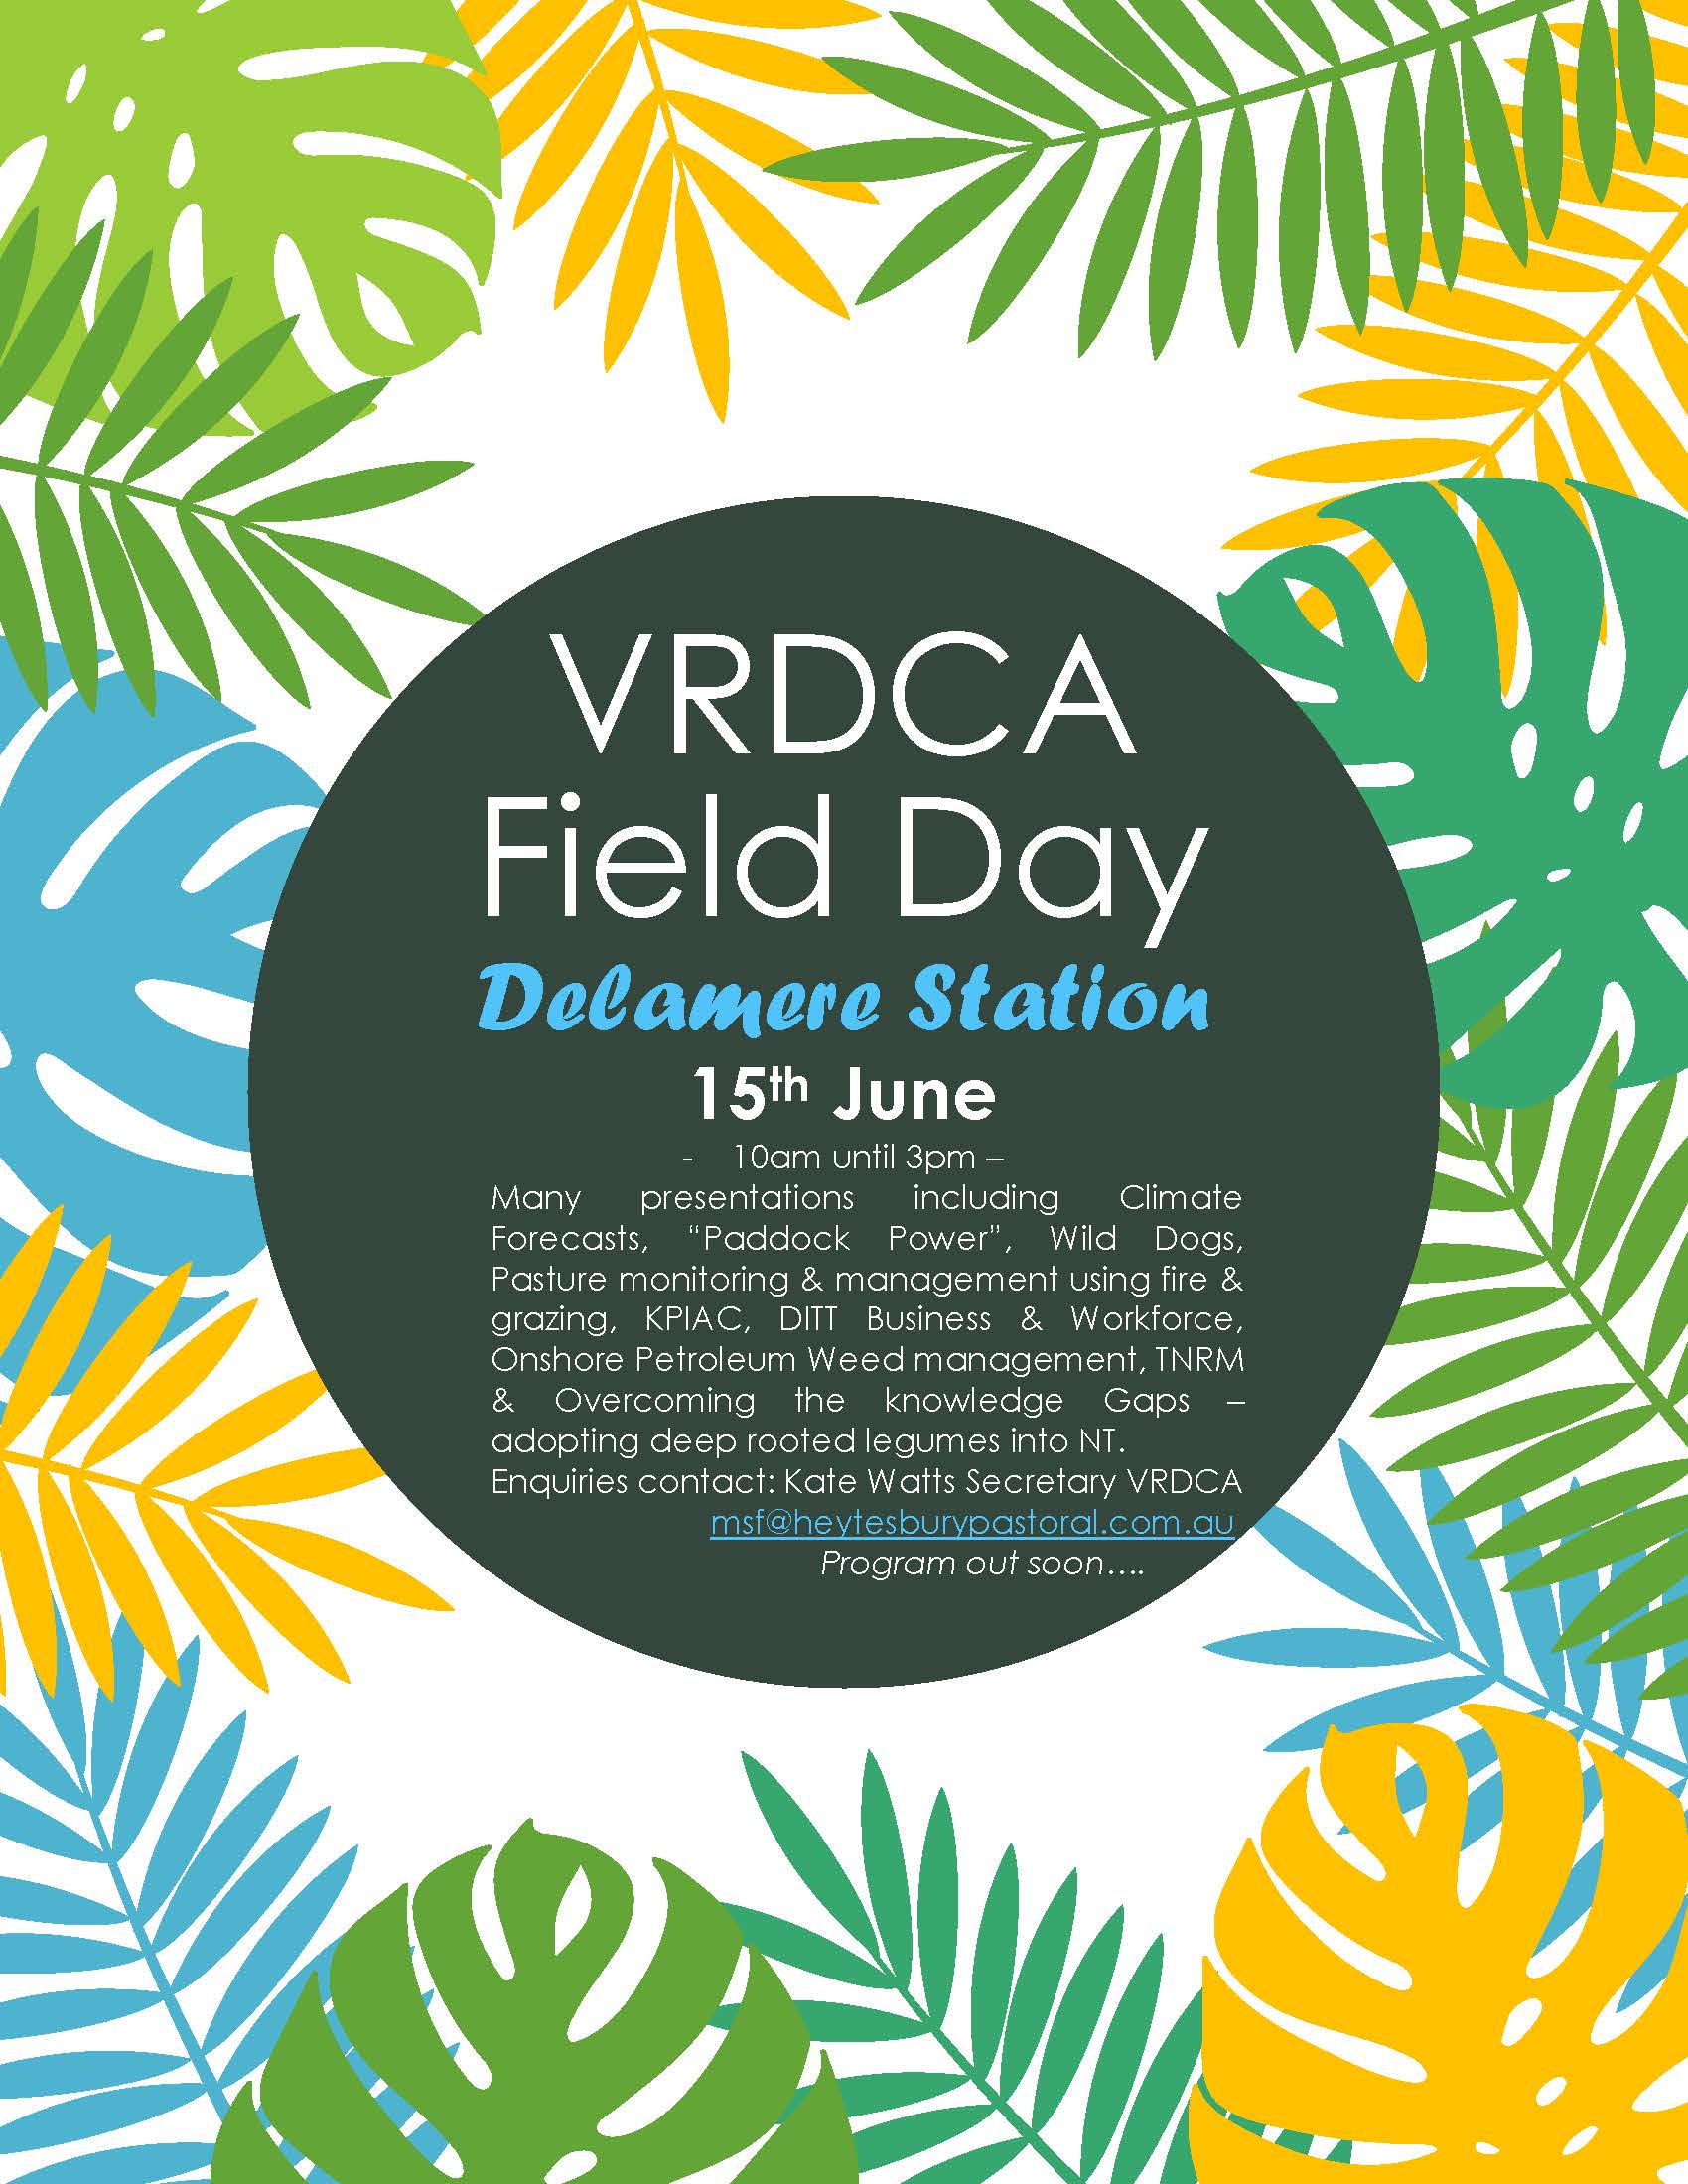 VRDCA field day, 15 June at Delamere Station.